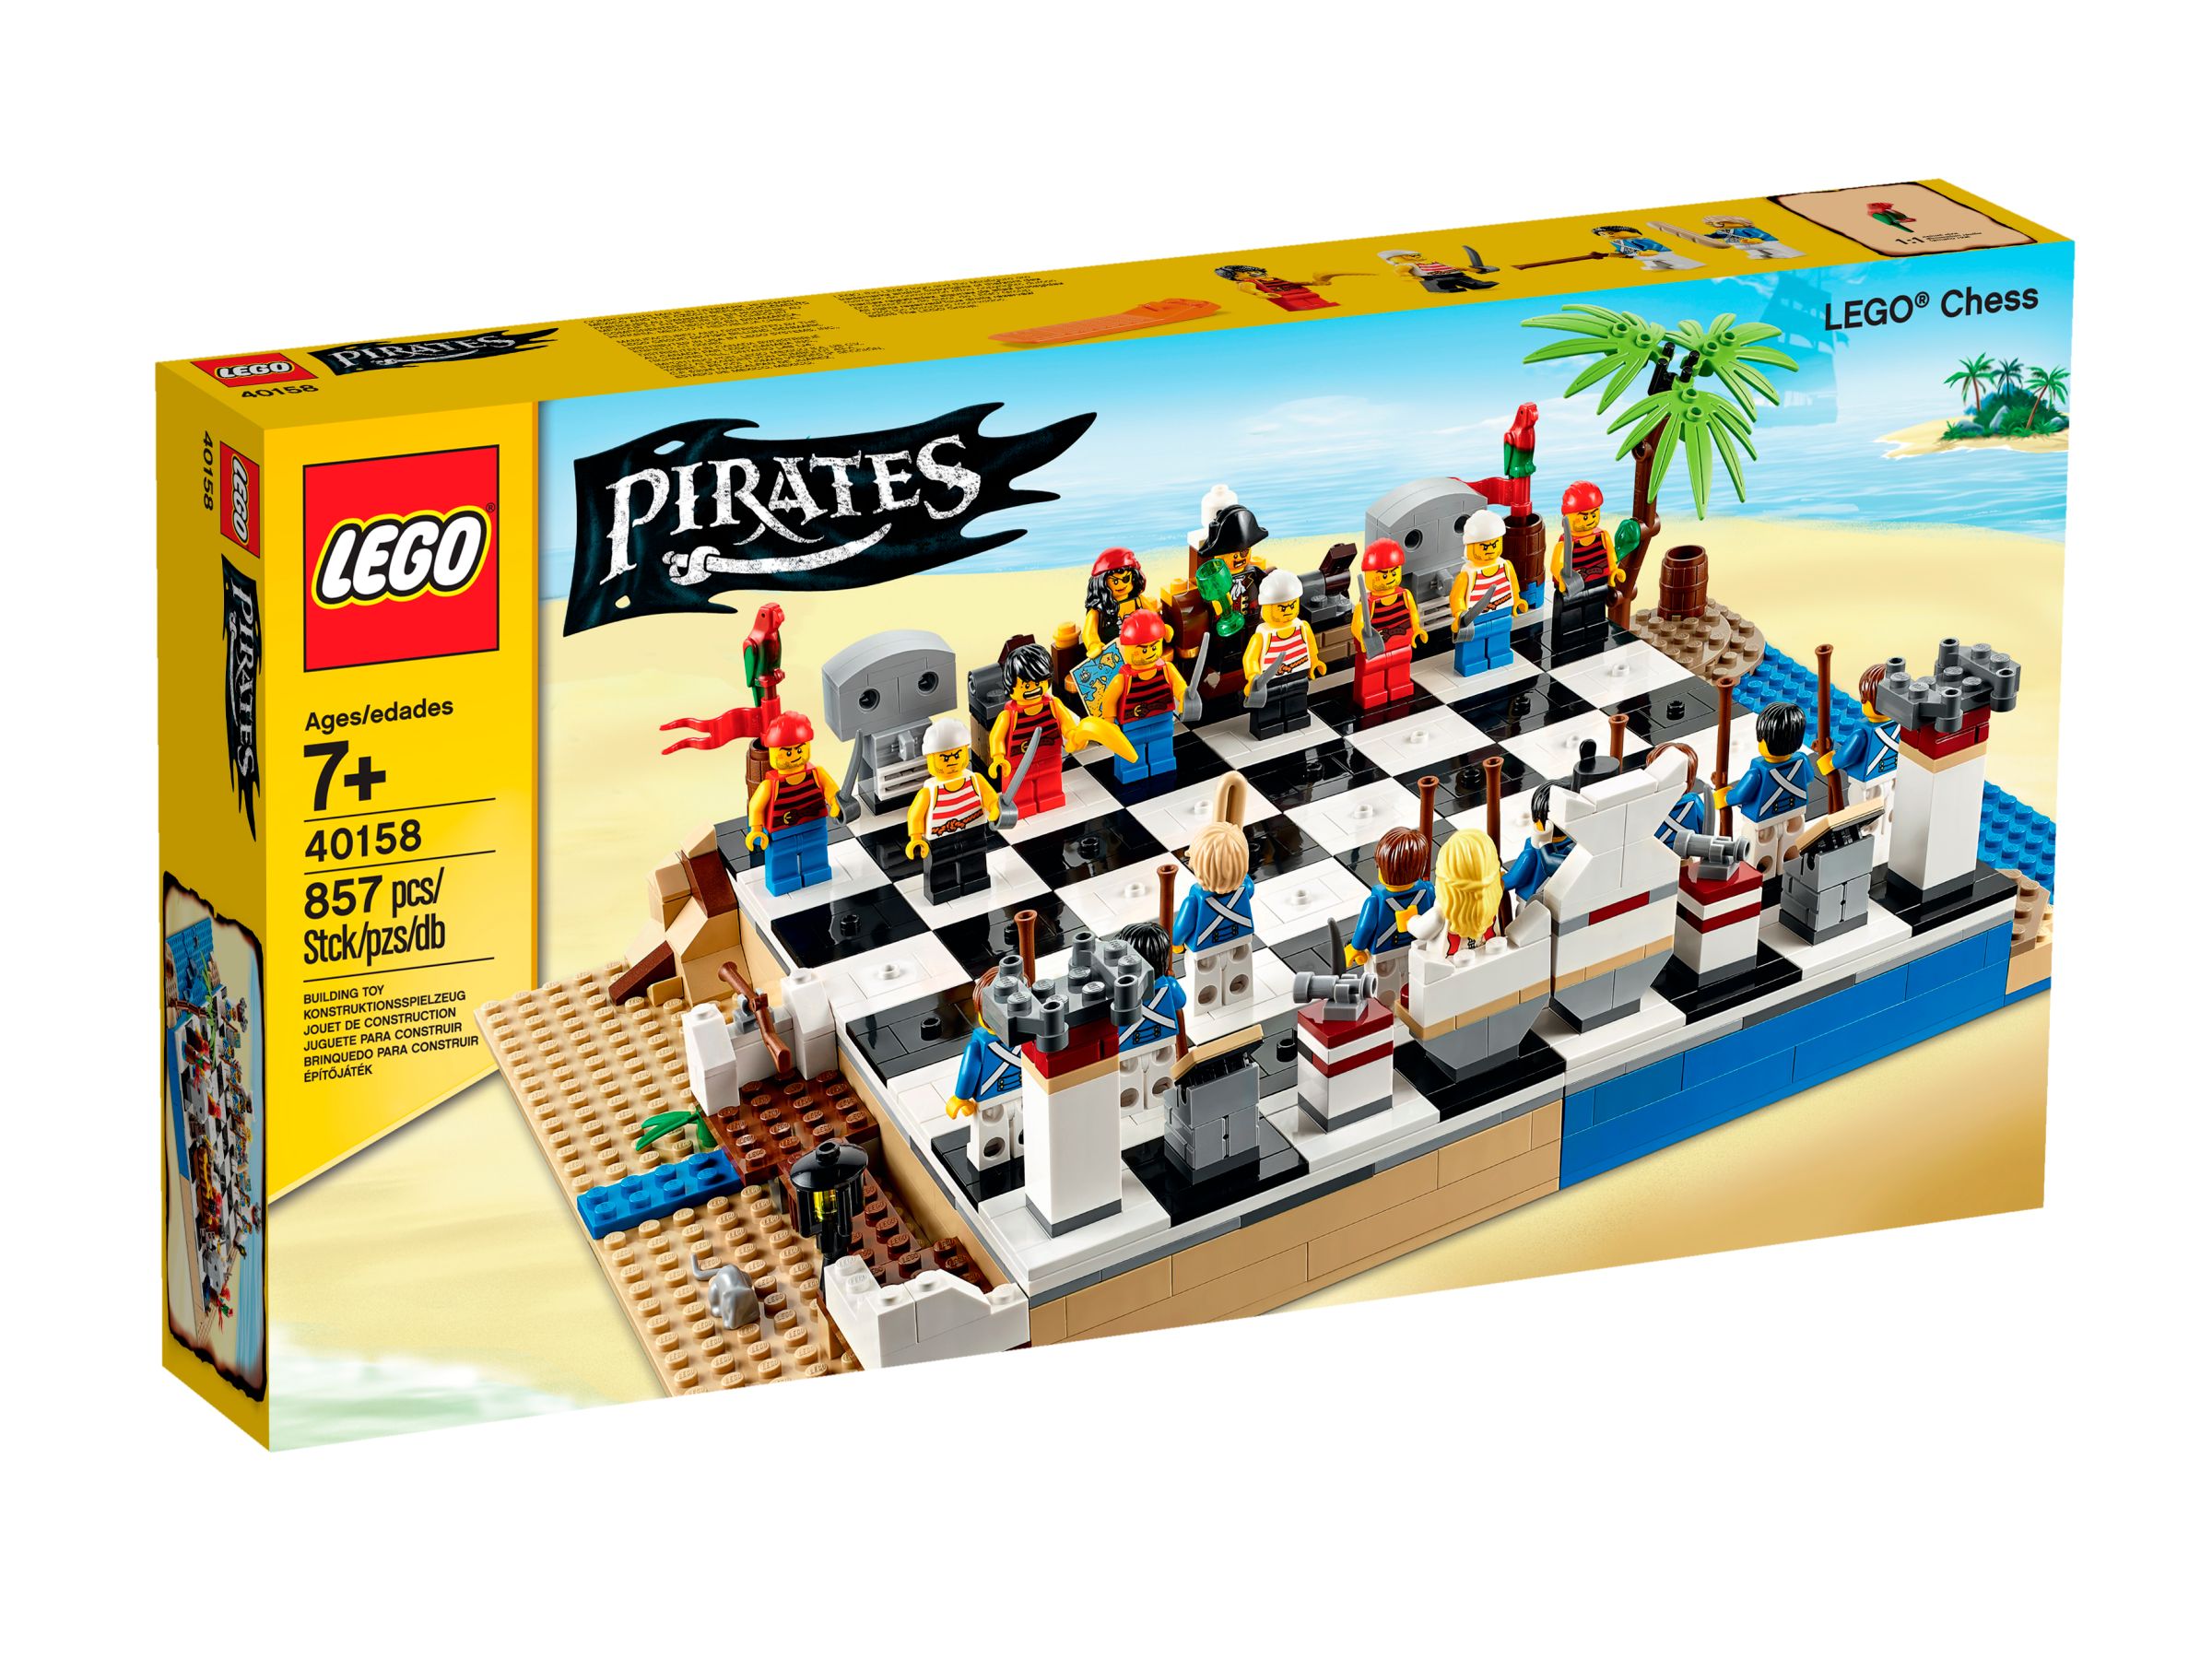 LEGO-40158-Pirates-Chess-Set-Box.jpg